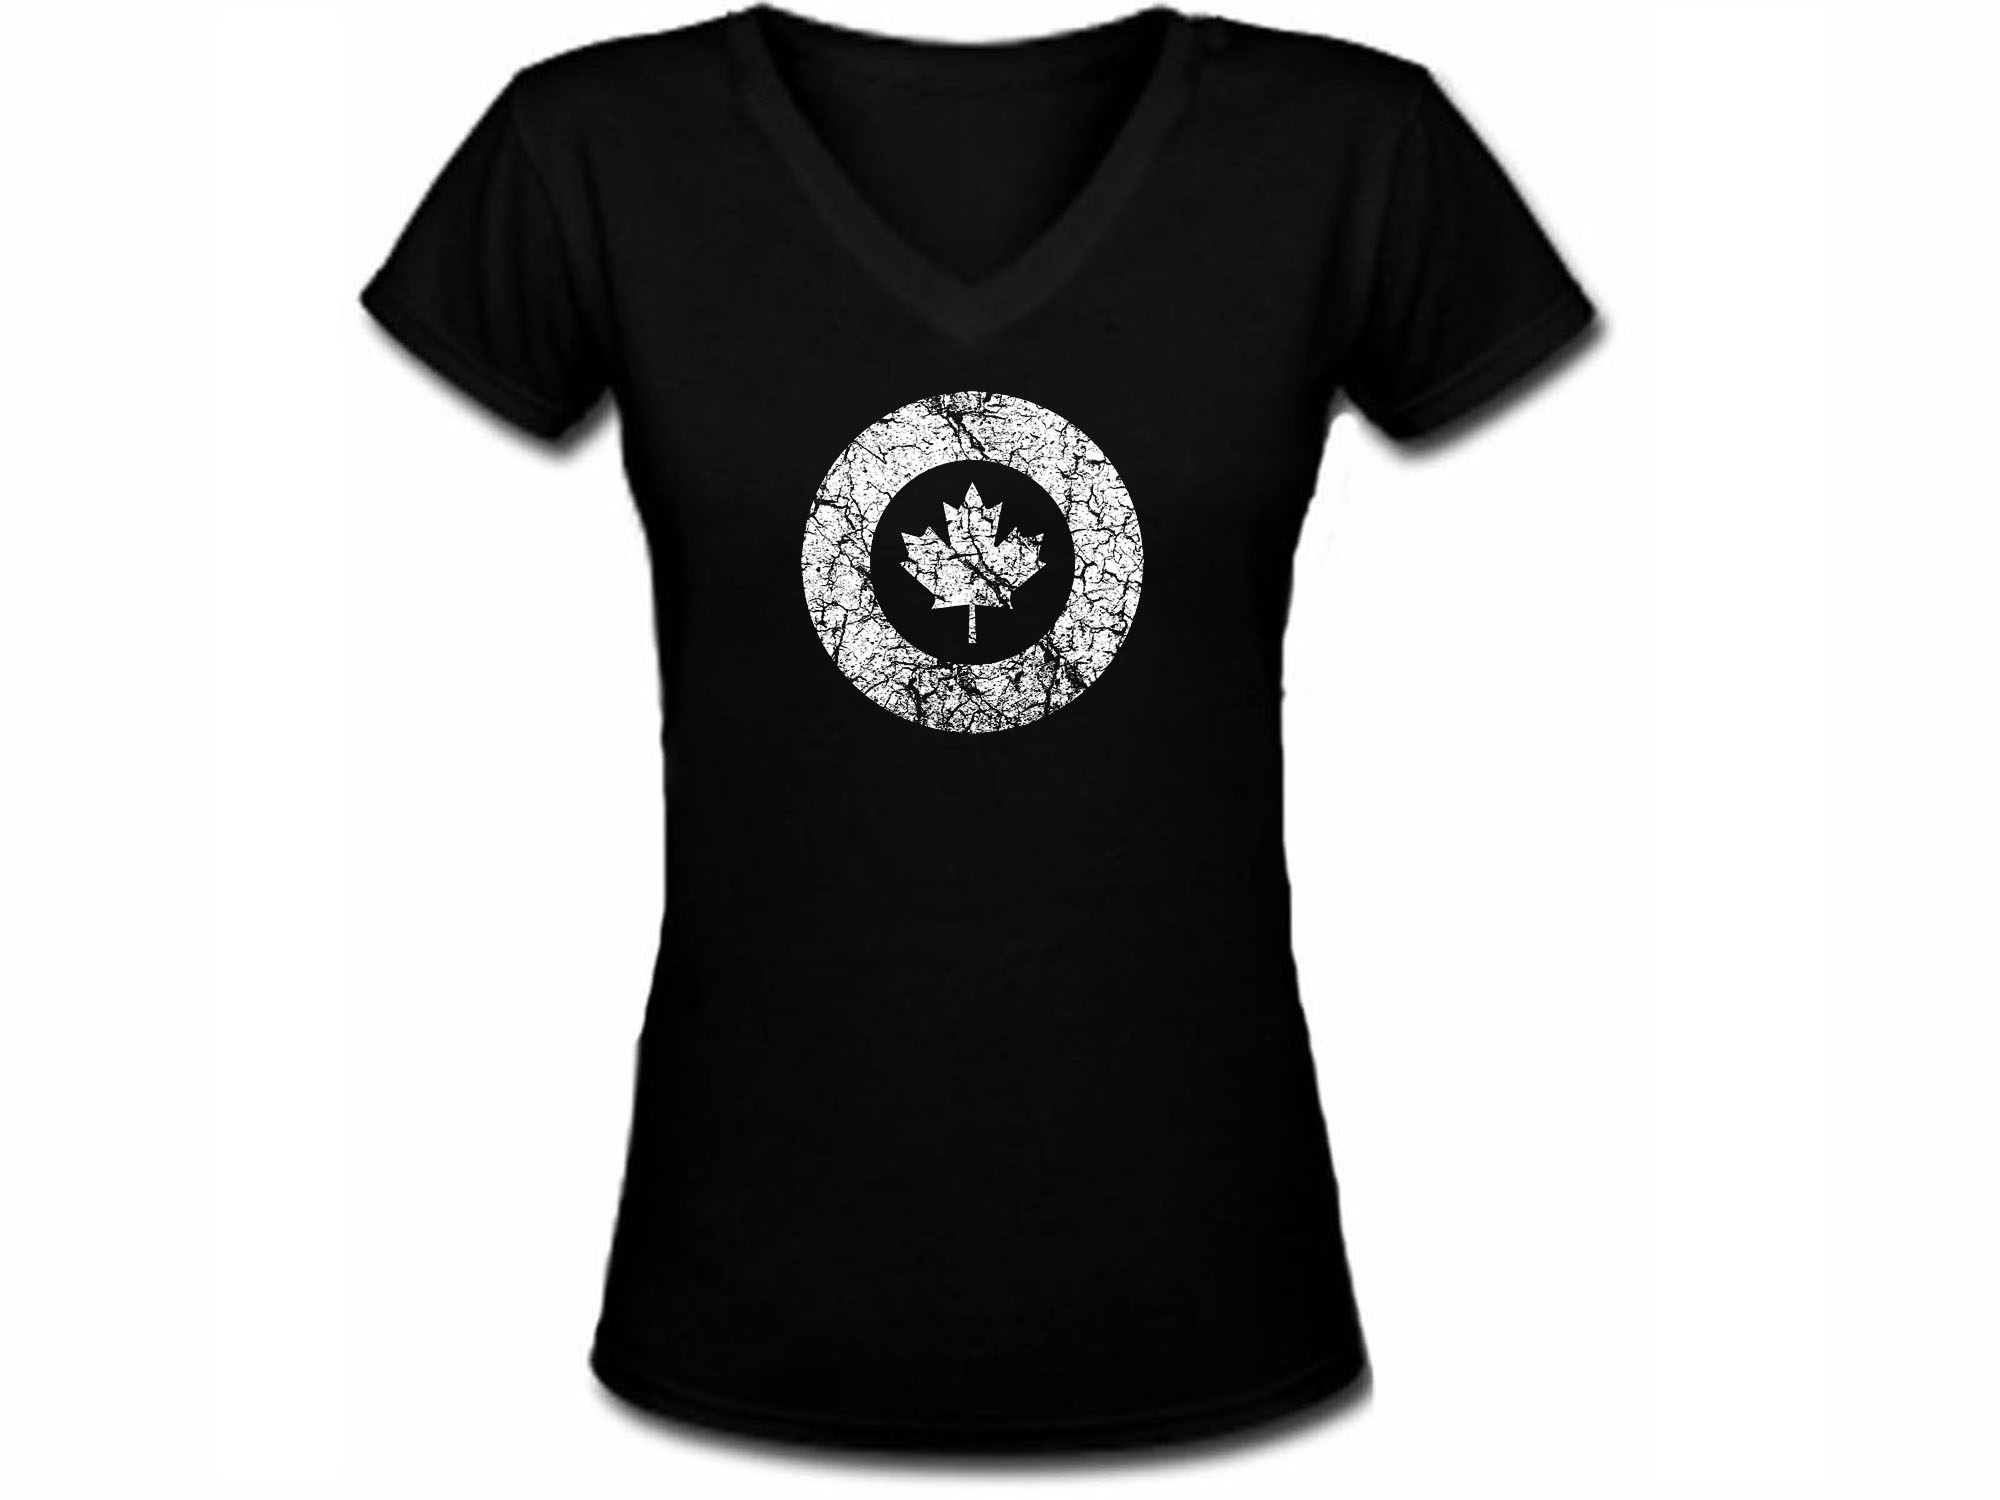 Canadian air force retro emblem women v neck black t shirt